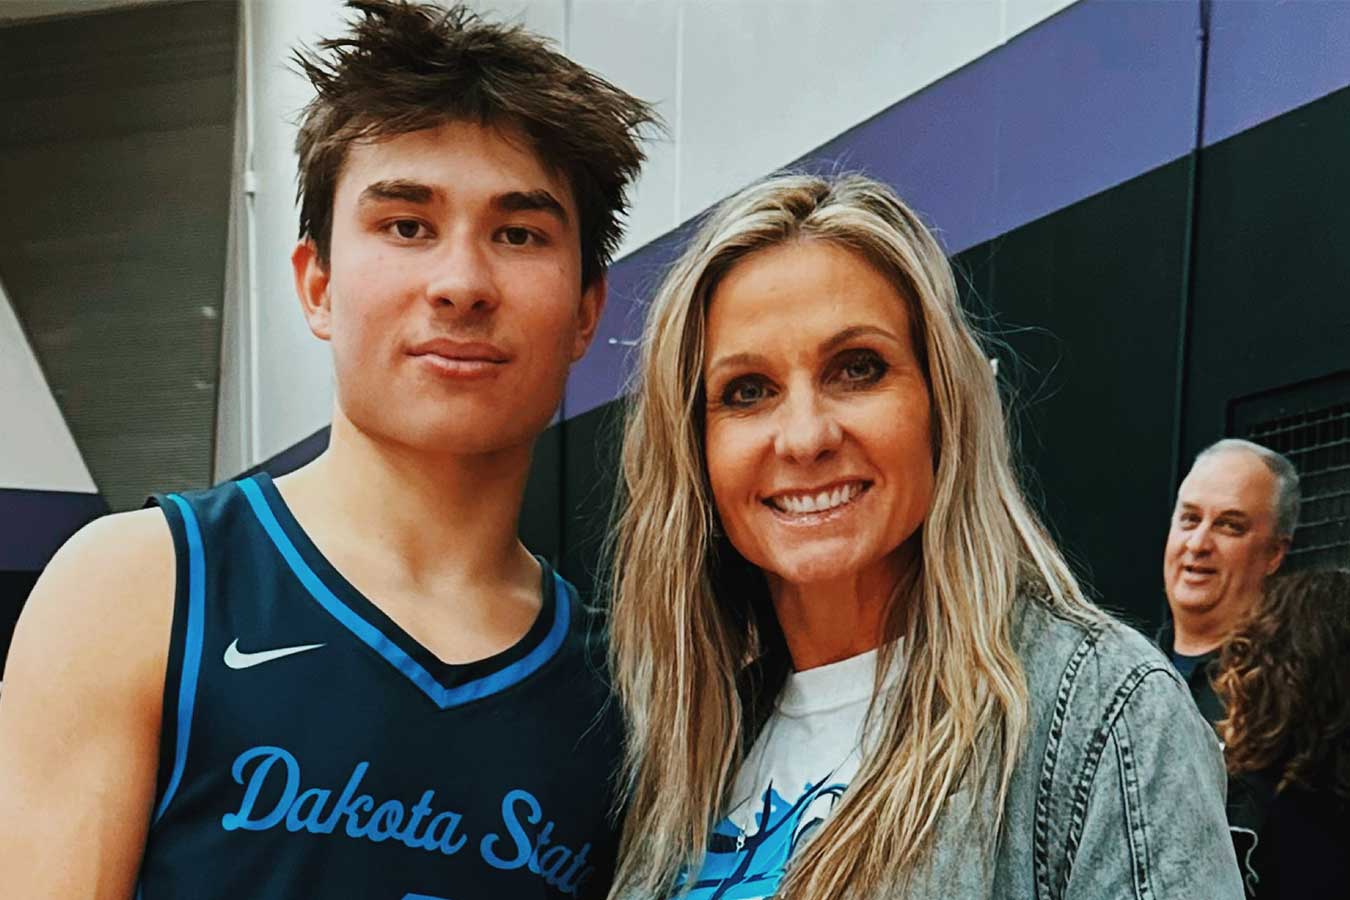 Summer Schultz (right) with her son Brayden Pankonen, a freshman on the men's basketball team at DSU.